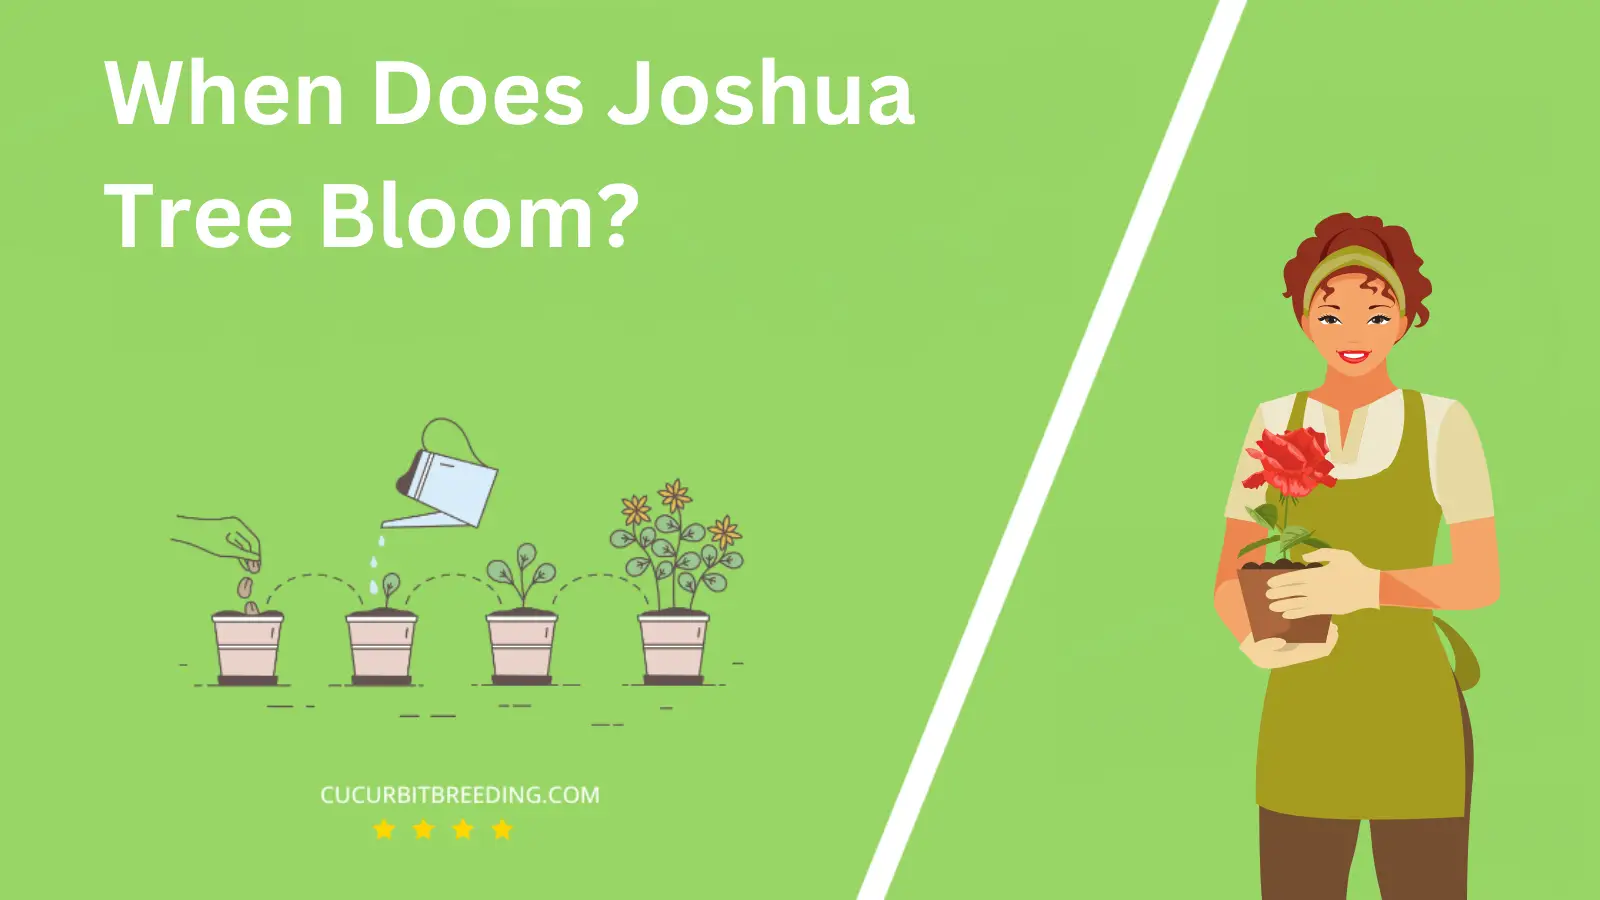 When Does Joshua Tree Bloom?